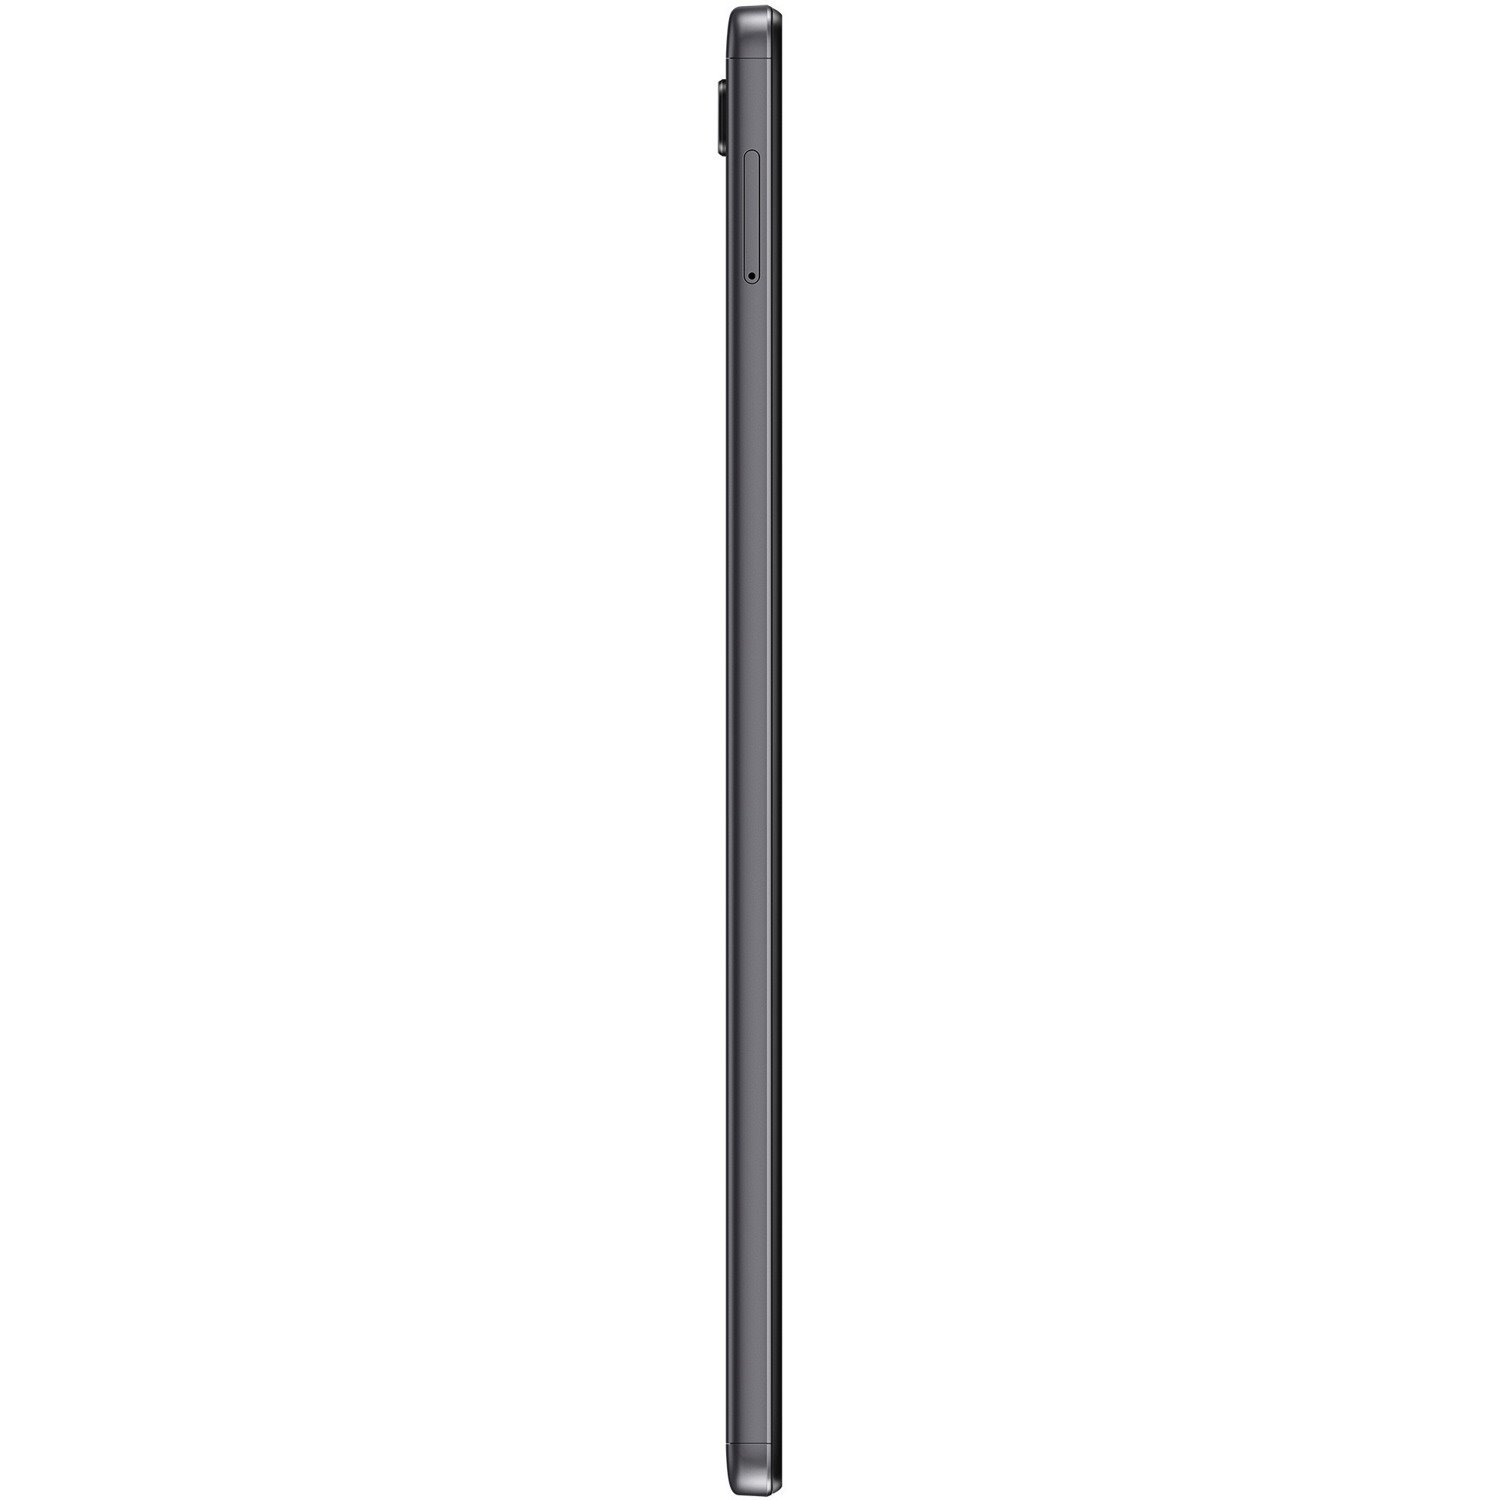 Samsung Galaxy Tab A7 Lite Tablet - 22.1 cm (8.7") WXGA+ - MediaTek MT8768T Helio P22T Octa-core - 3 GB - 32 GB Storage - Android 11 - Grey